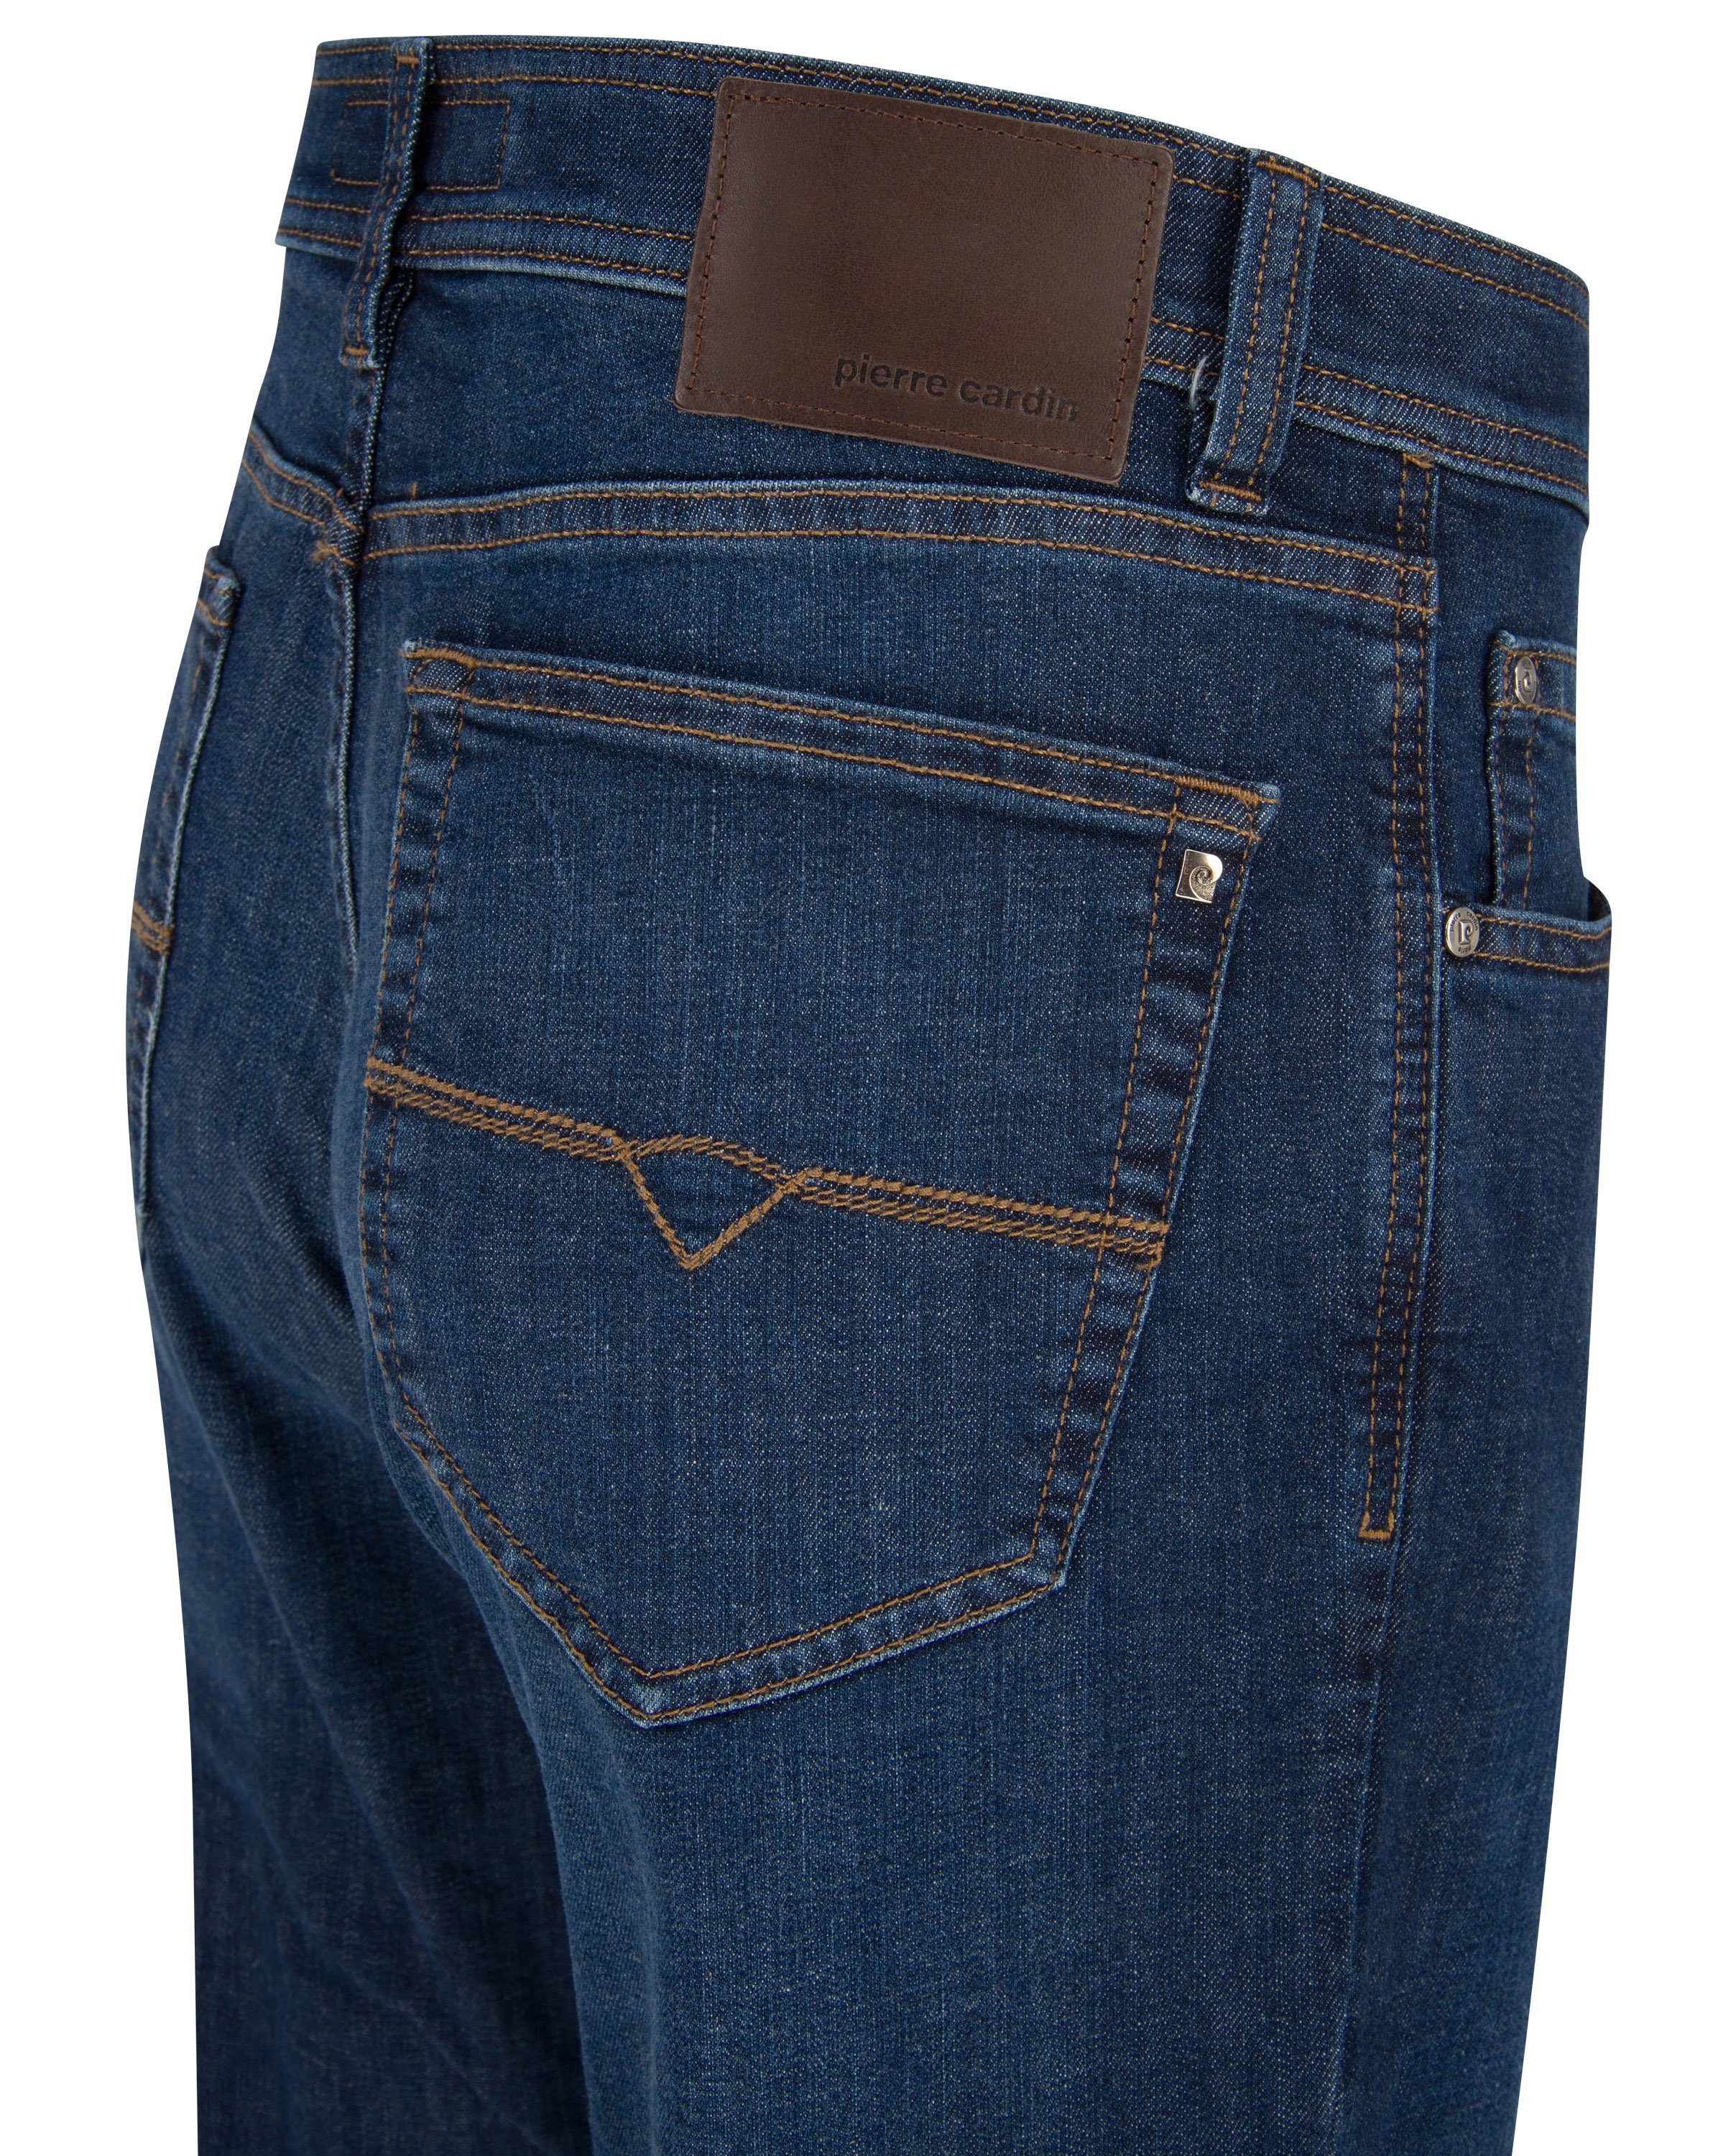 Pierre Cardin 5-Pocket-Jeans PIERRE DEAUVILLE used CARDIN sea 7010.03 3496 - deep THERMO indigo